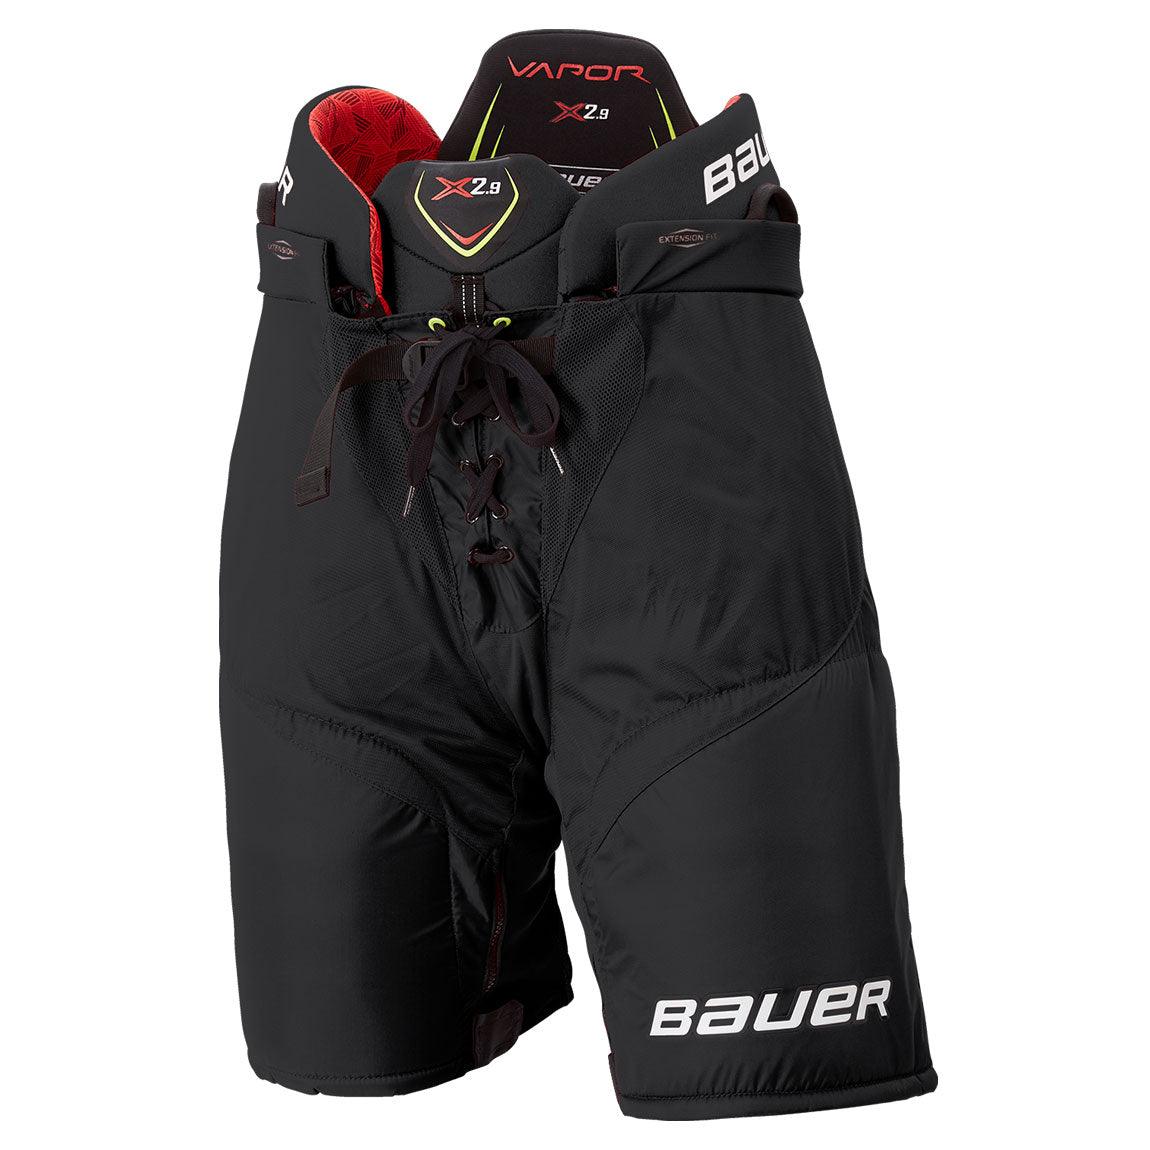 Vapor X2.9 Hockey Pants - Junior - Sports Excellence